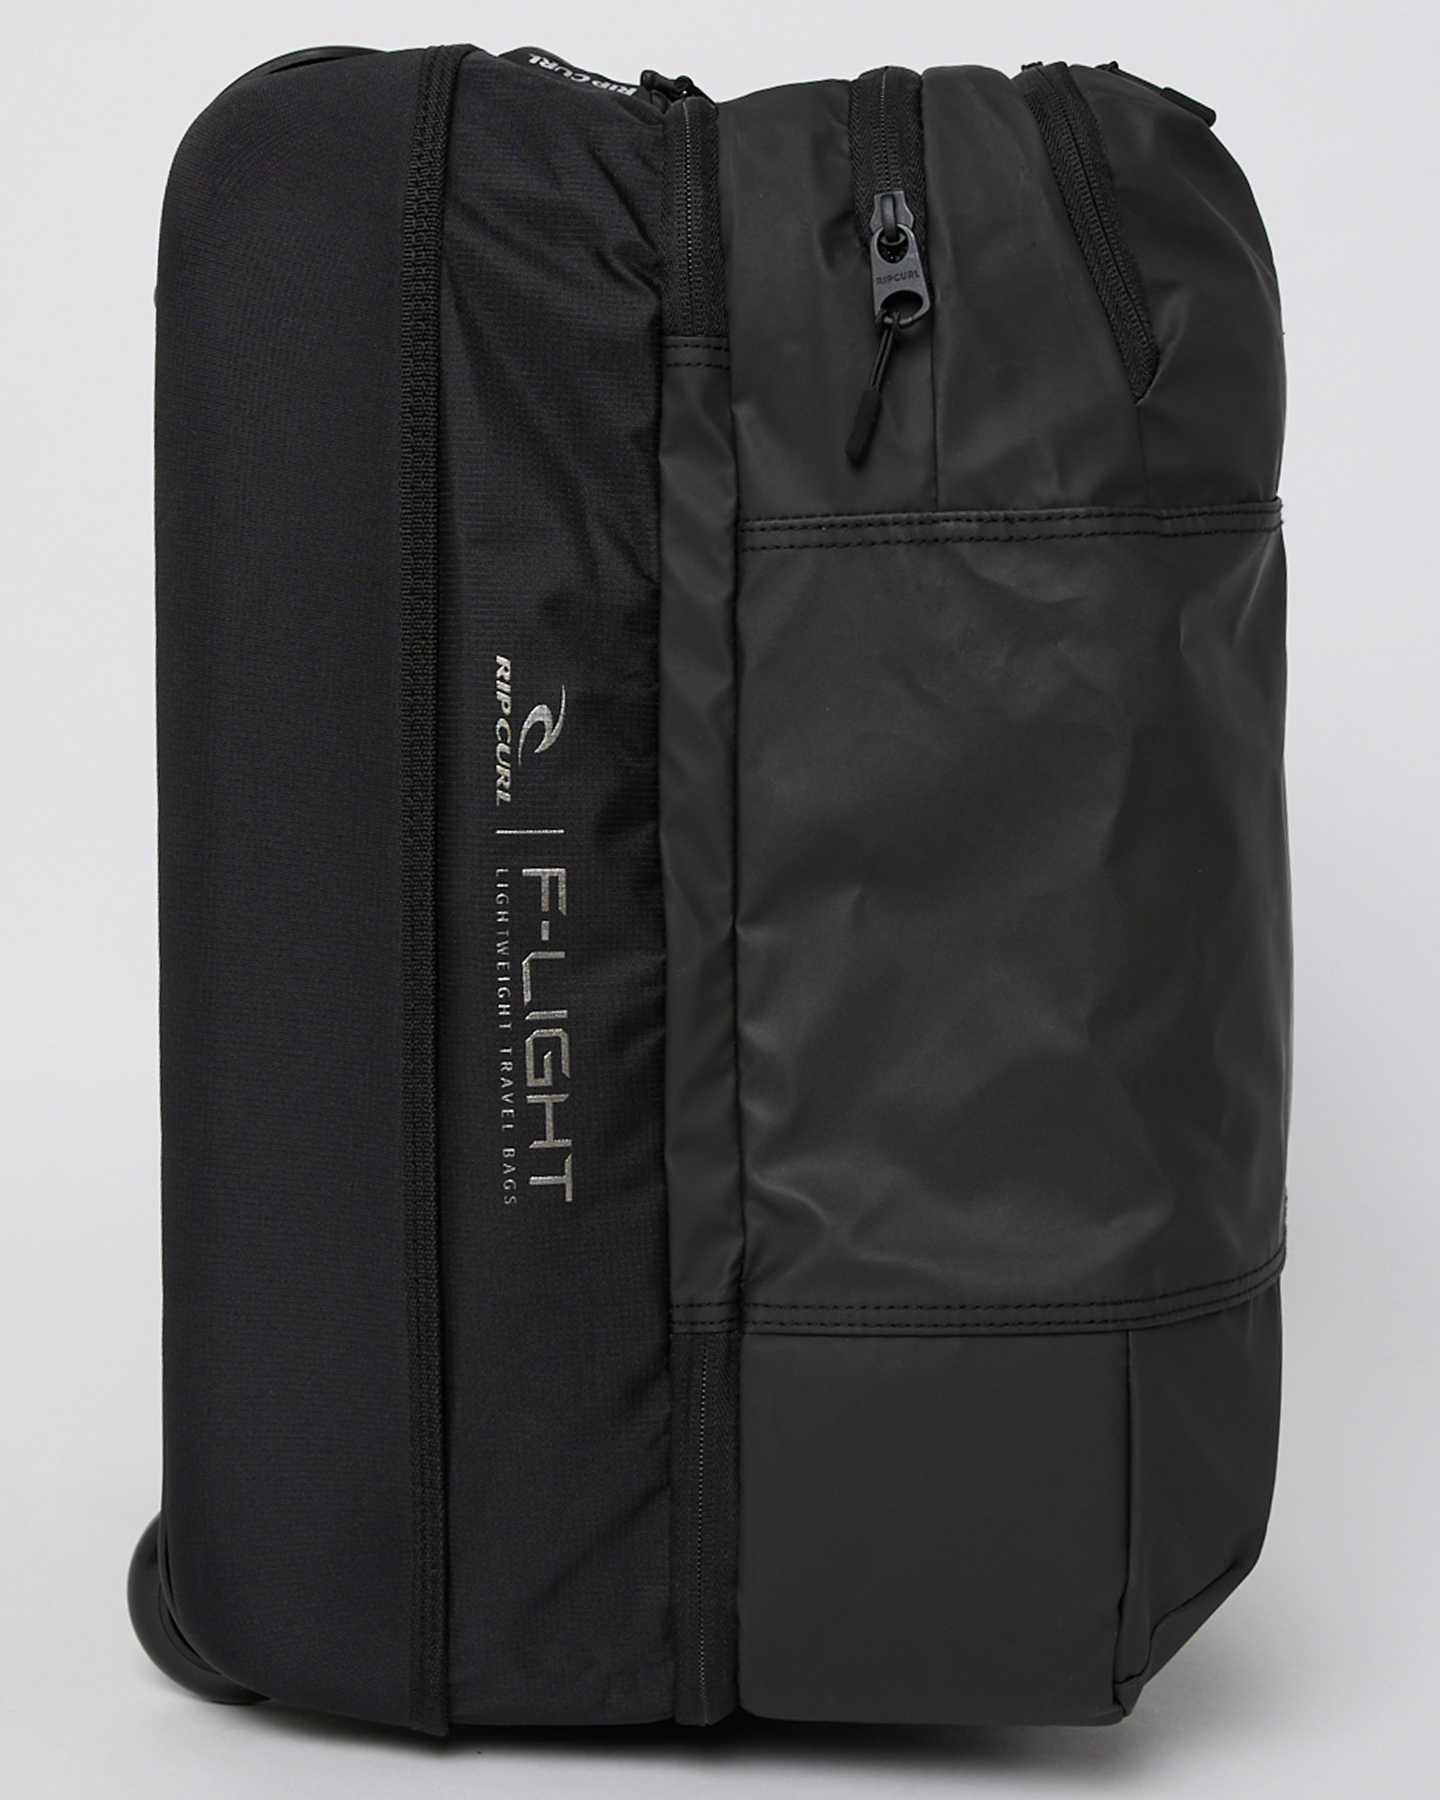 best 35l travel bag